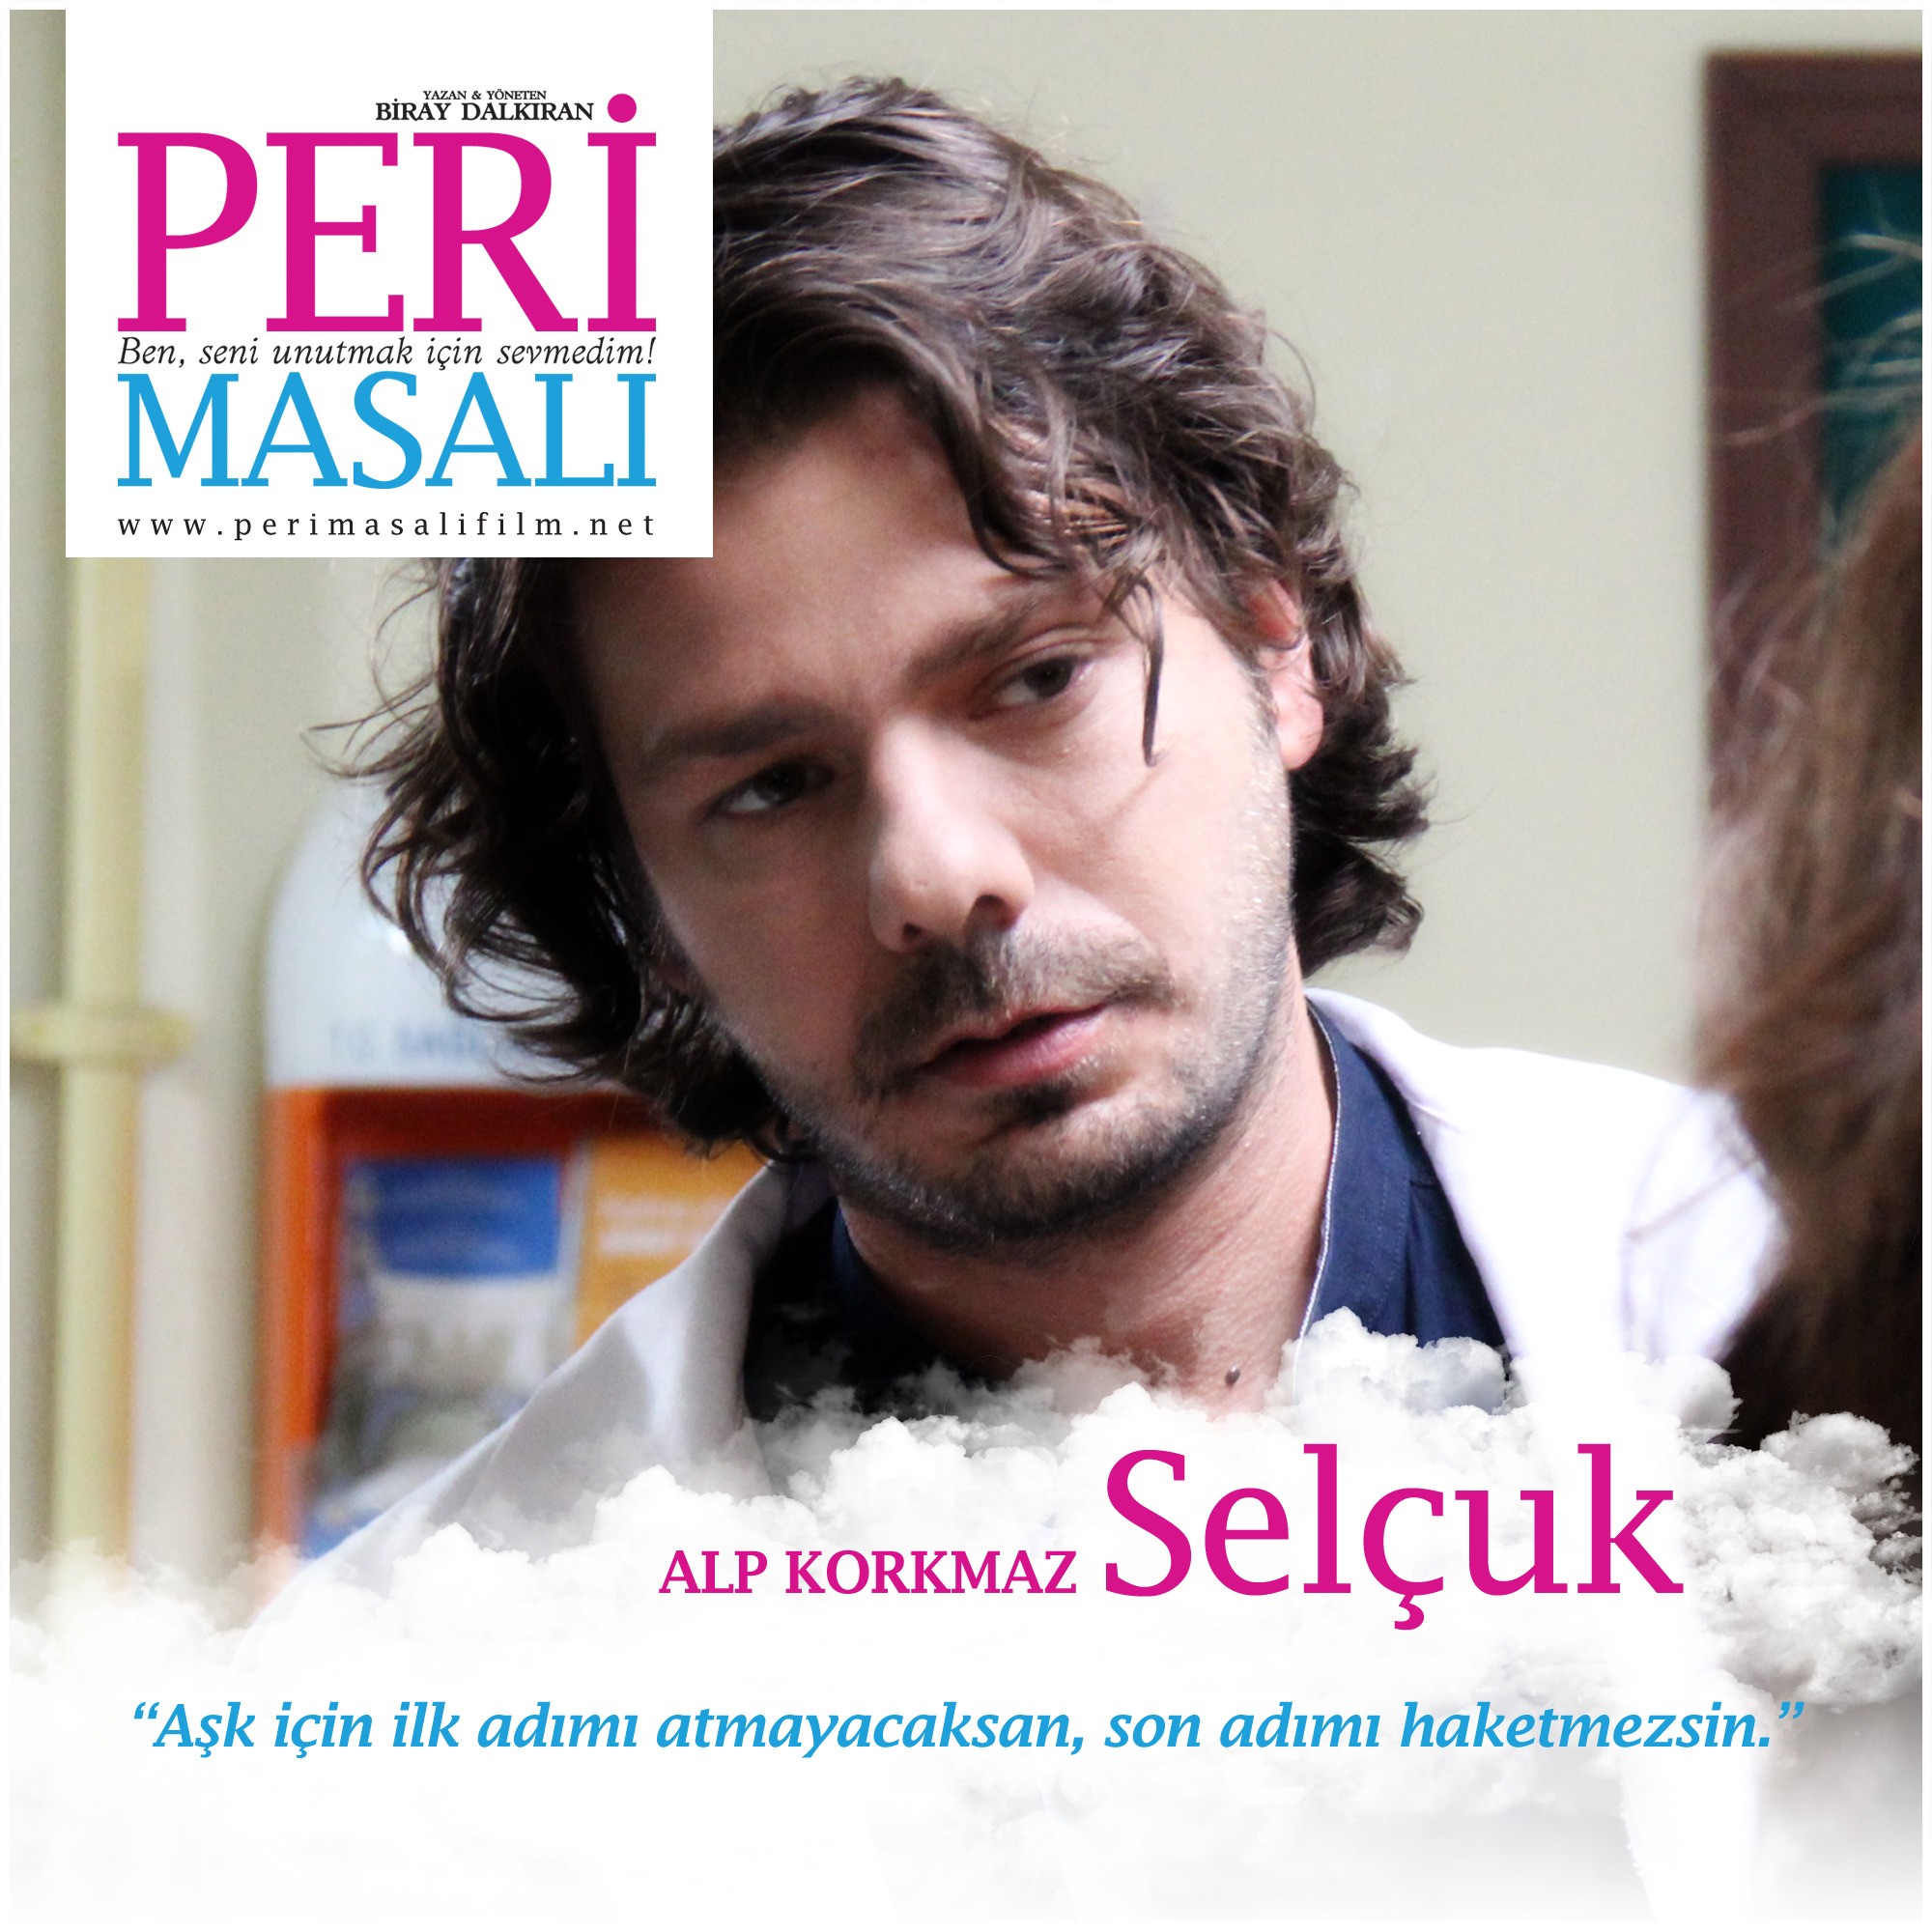 Mega Sized Movie Poster Image for Peri Masali (#8 of 9)